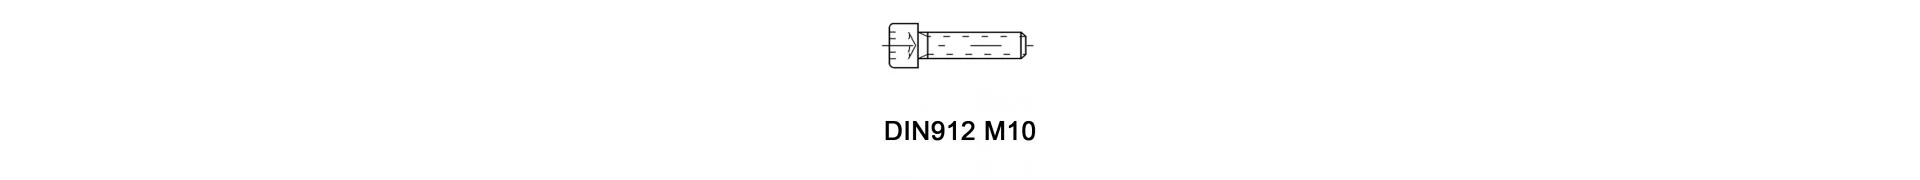 DIN912 M10